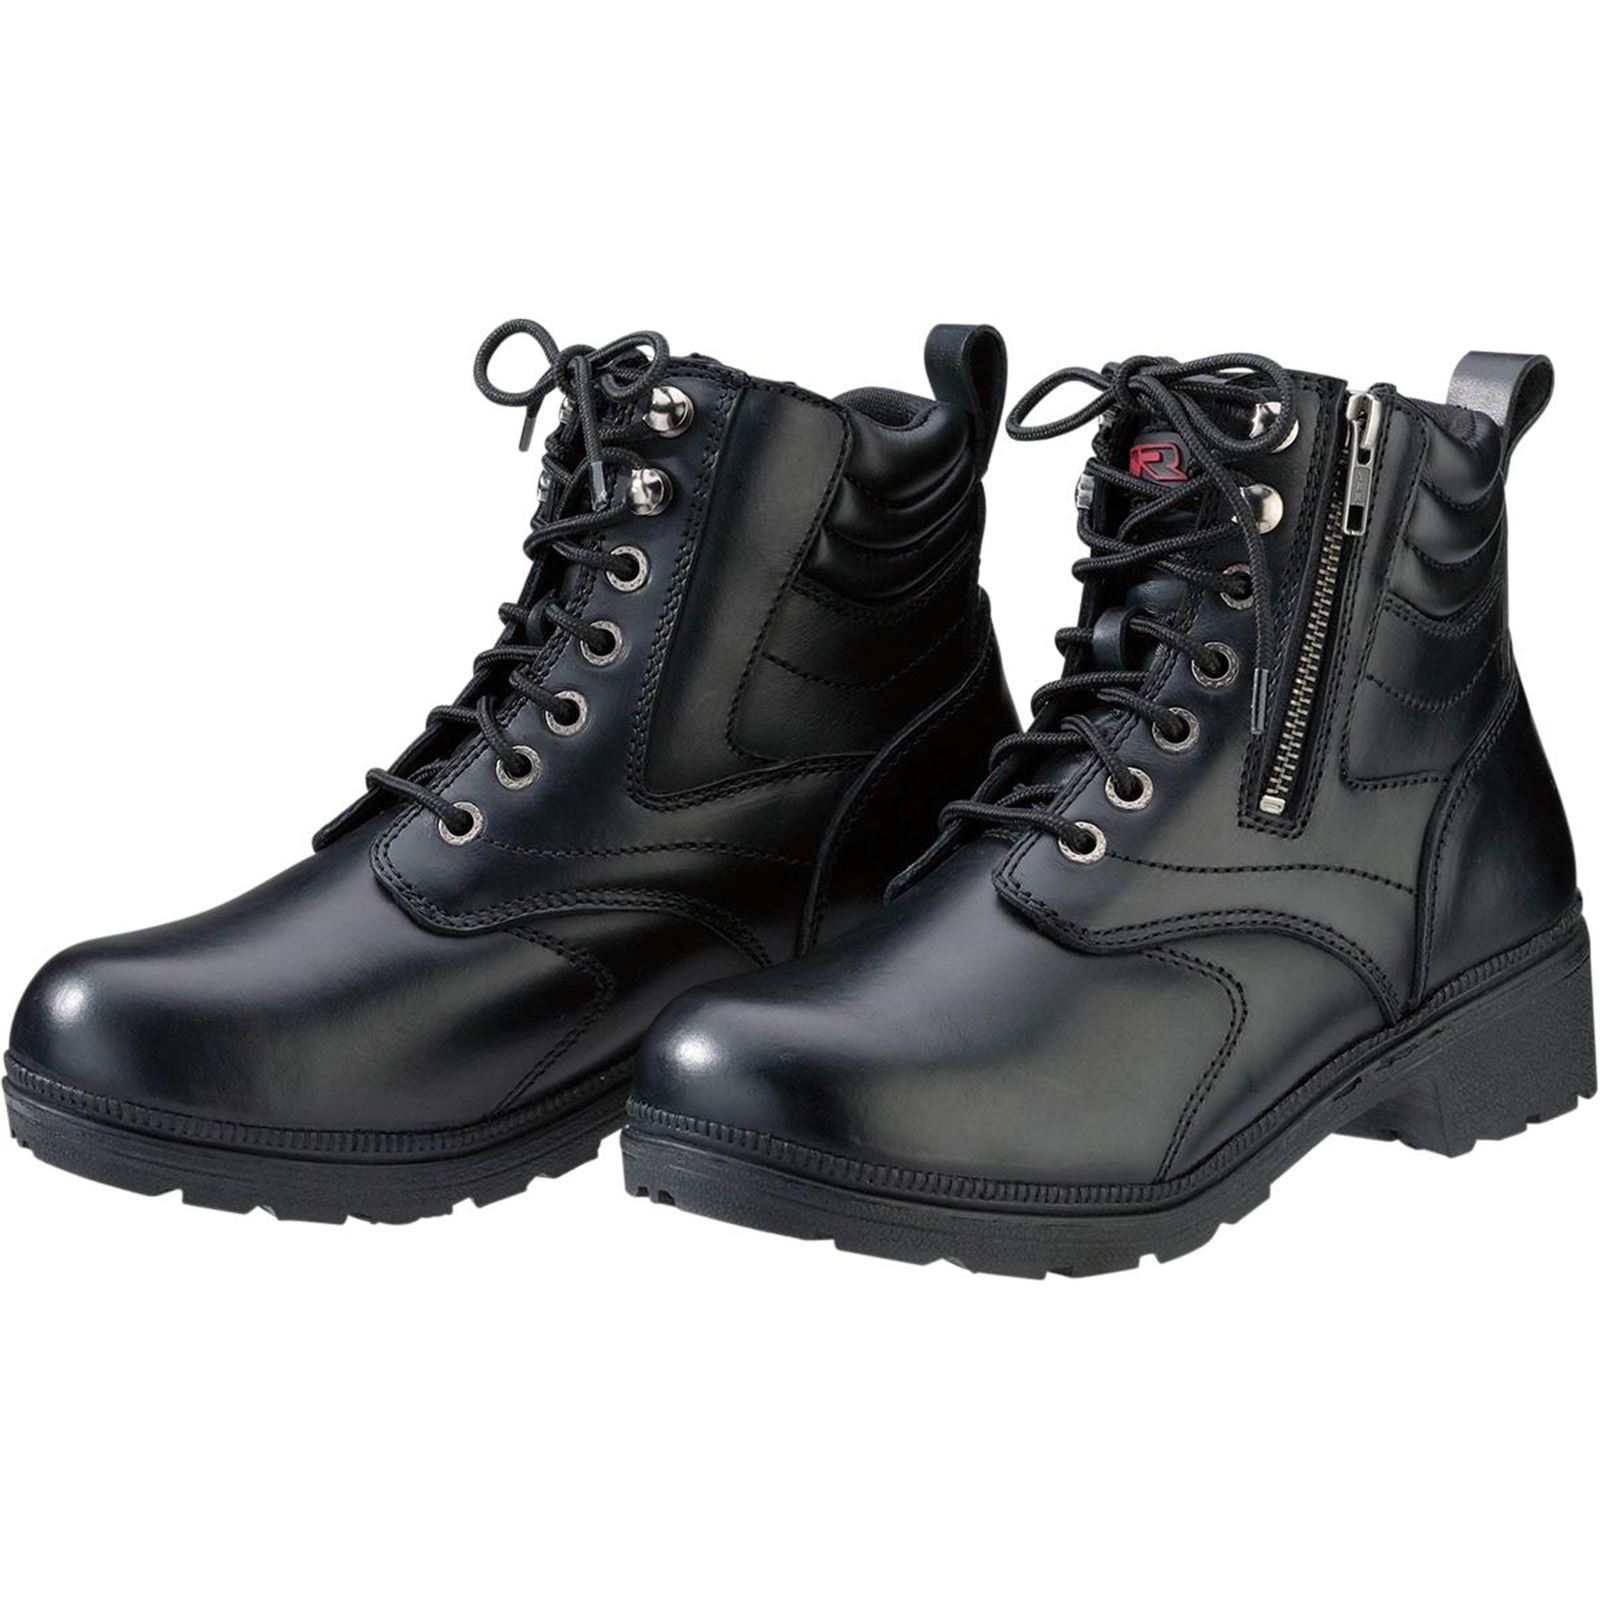 Z1R Women's Maxim Boots - Black - Size 8